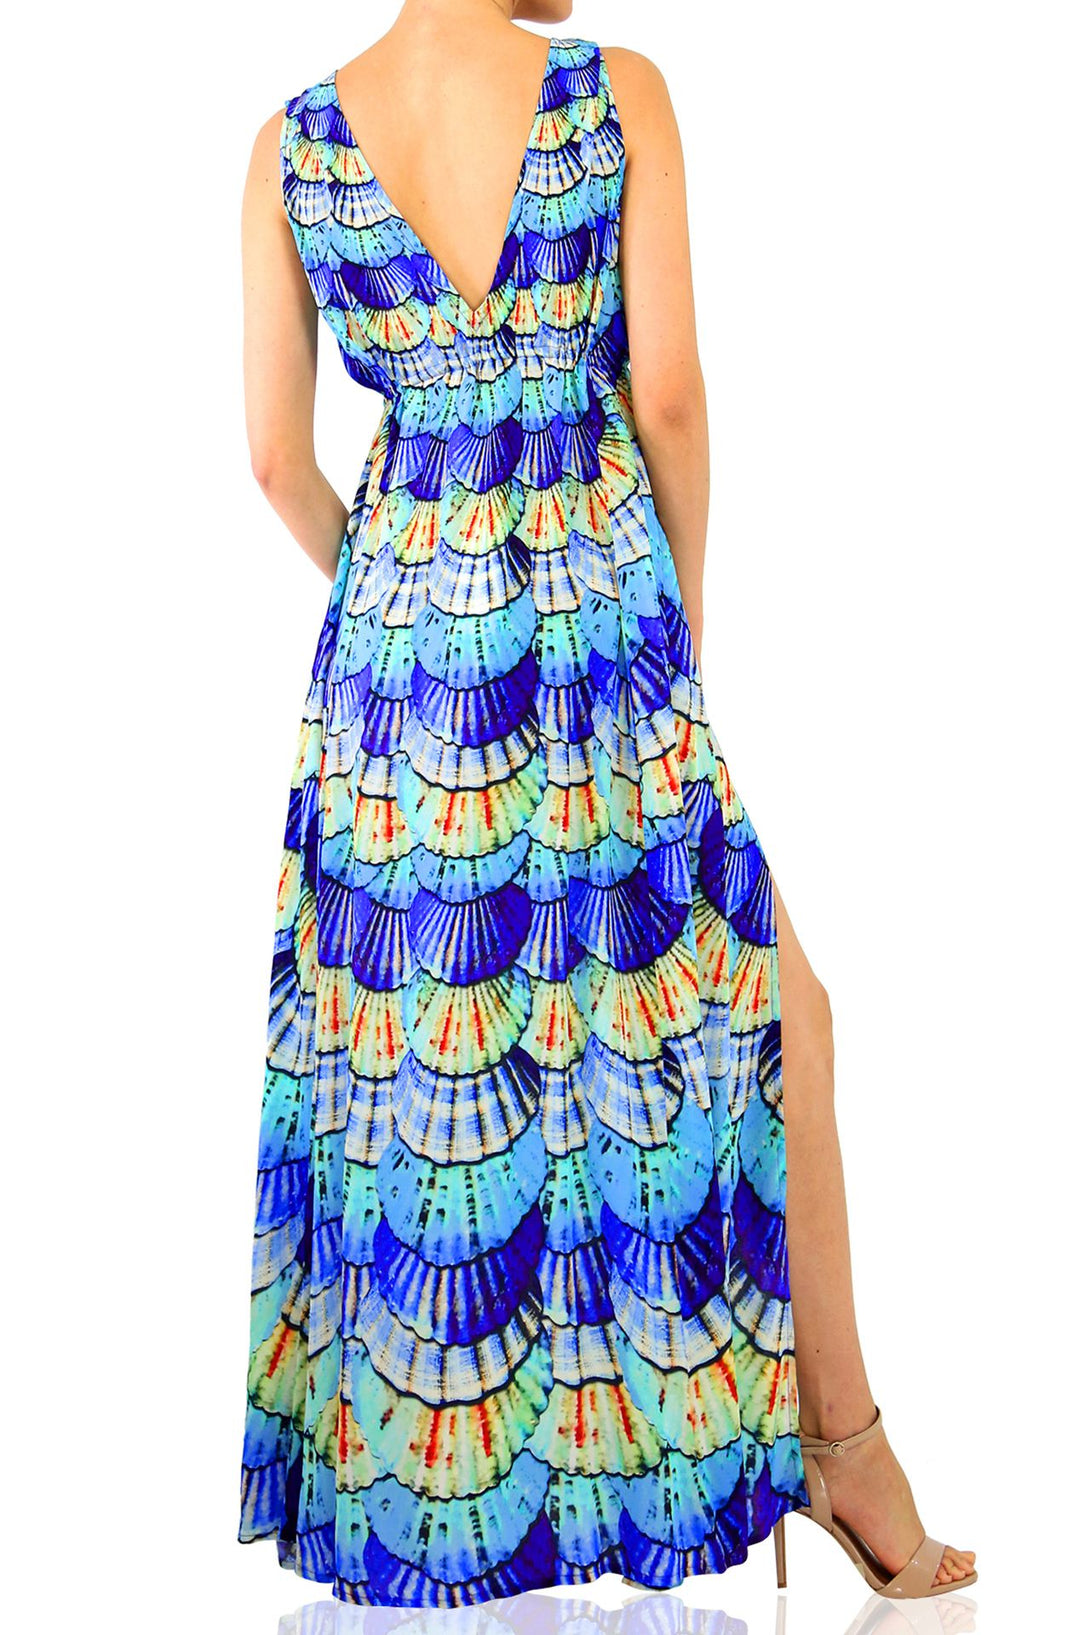 "navy blue cocktail dress" "flowy maxi dress" "long dresses for women" "Shahida Parides"